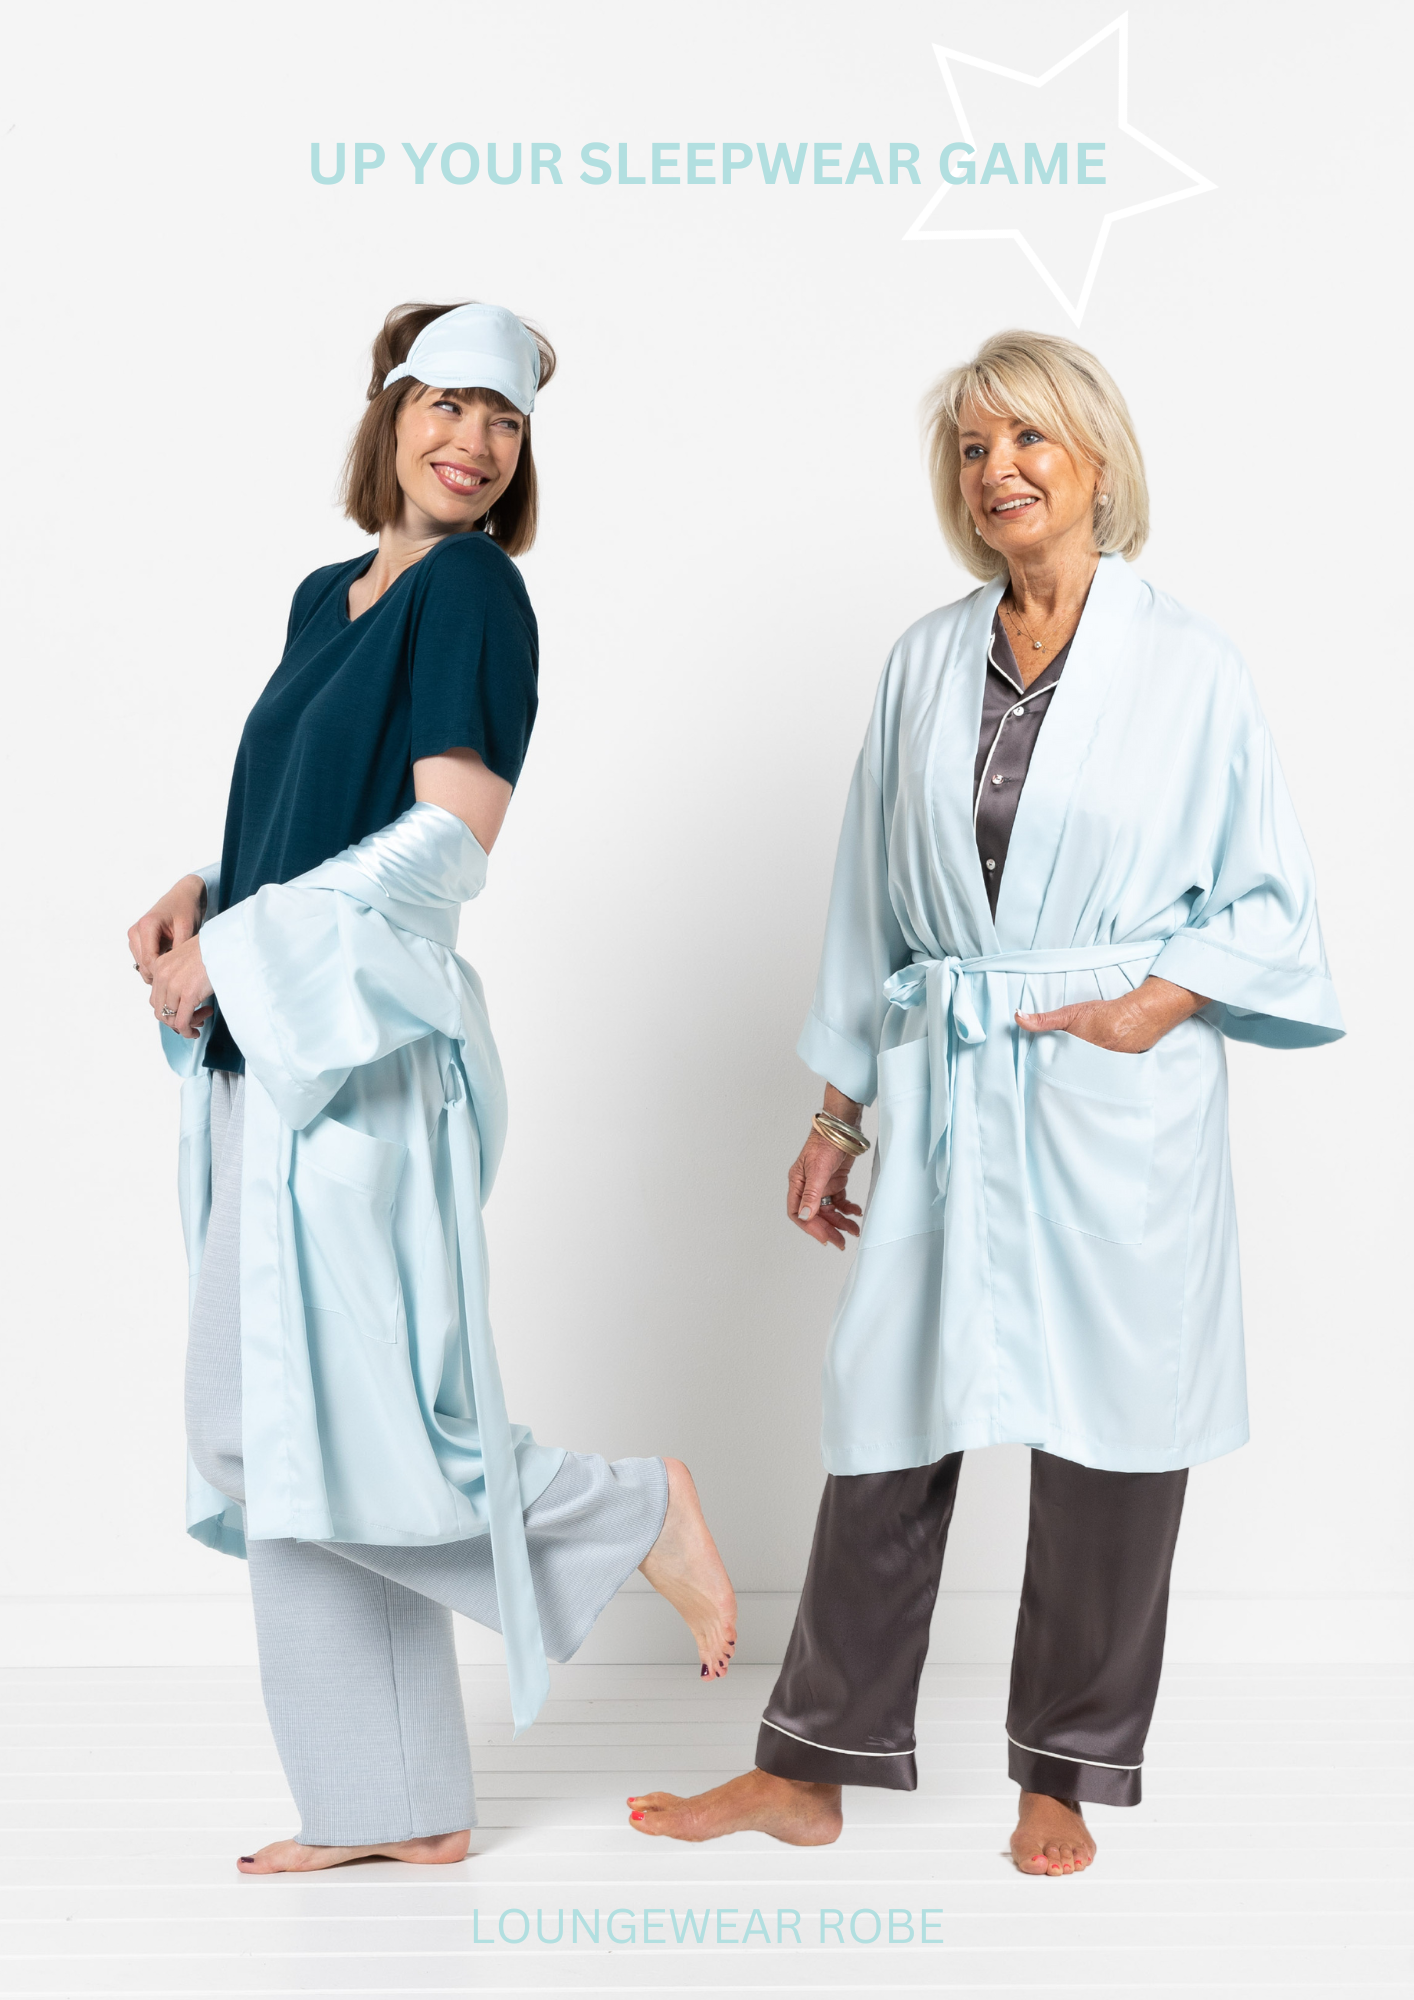 Upgrade your sleepwear with the Loungewear Robe pattern